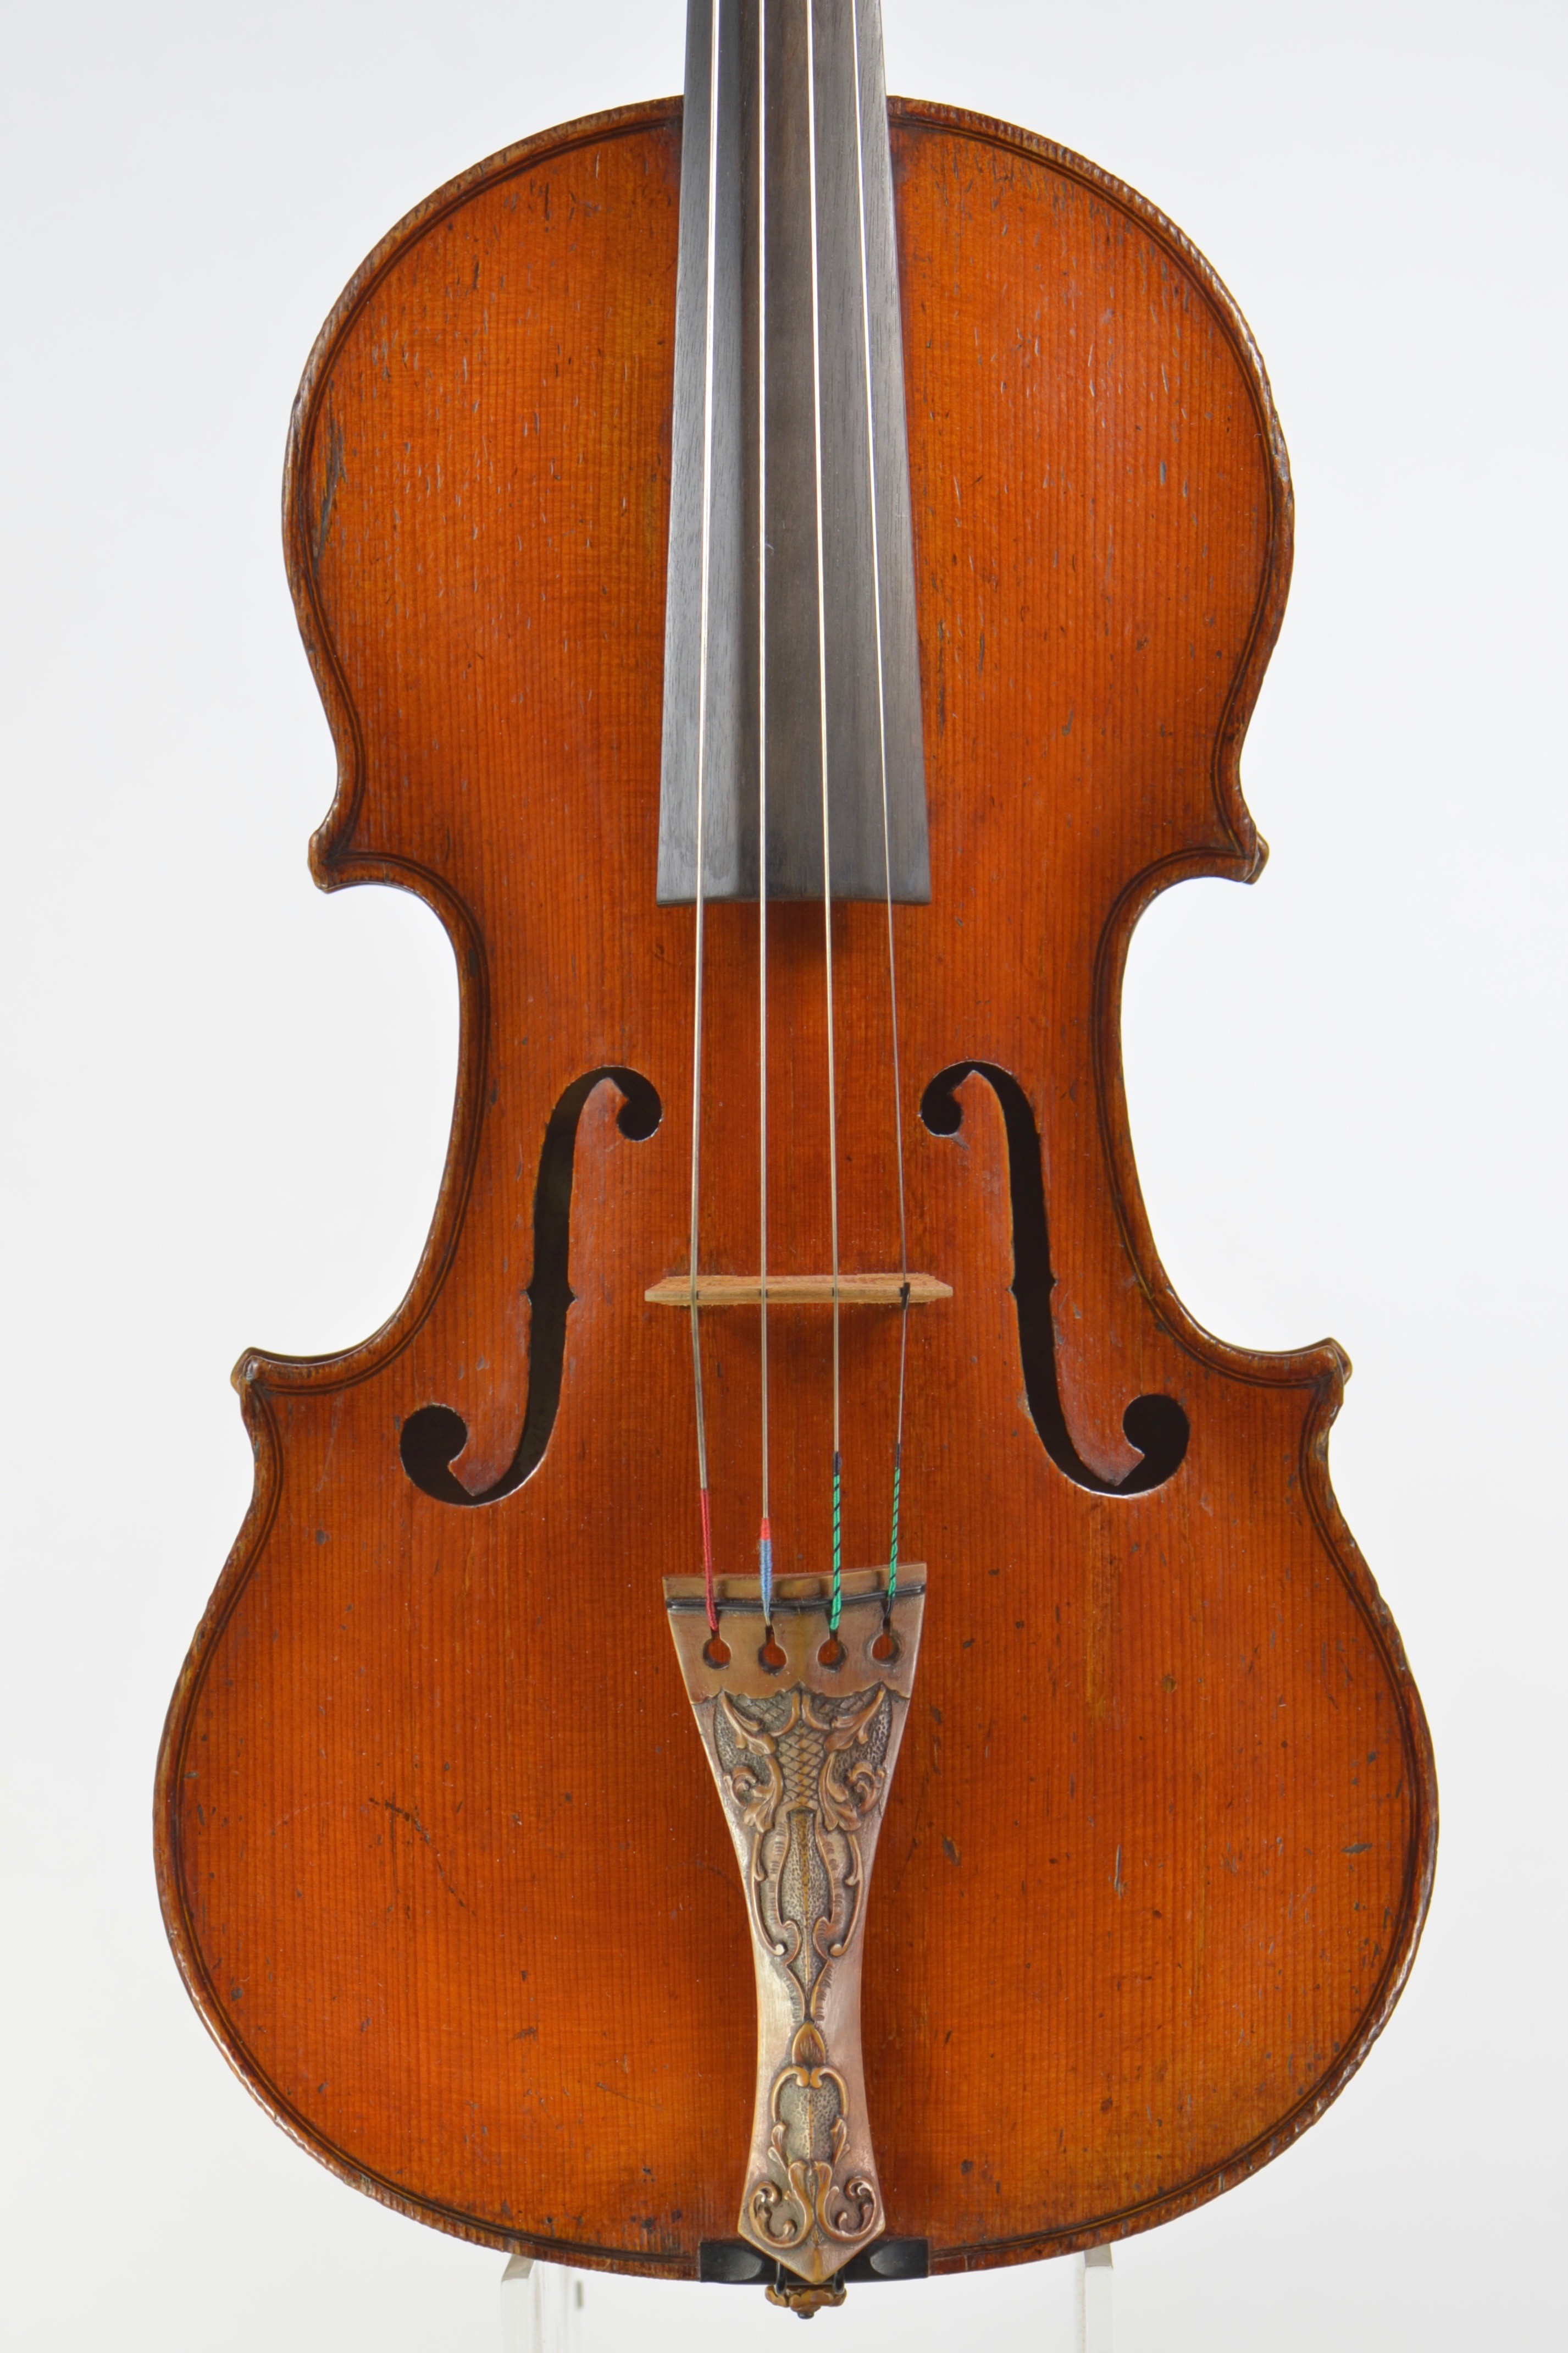 A viola by Joan Guillami filius, mid 18th century - Bishop Instruments & Bows